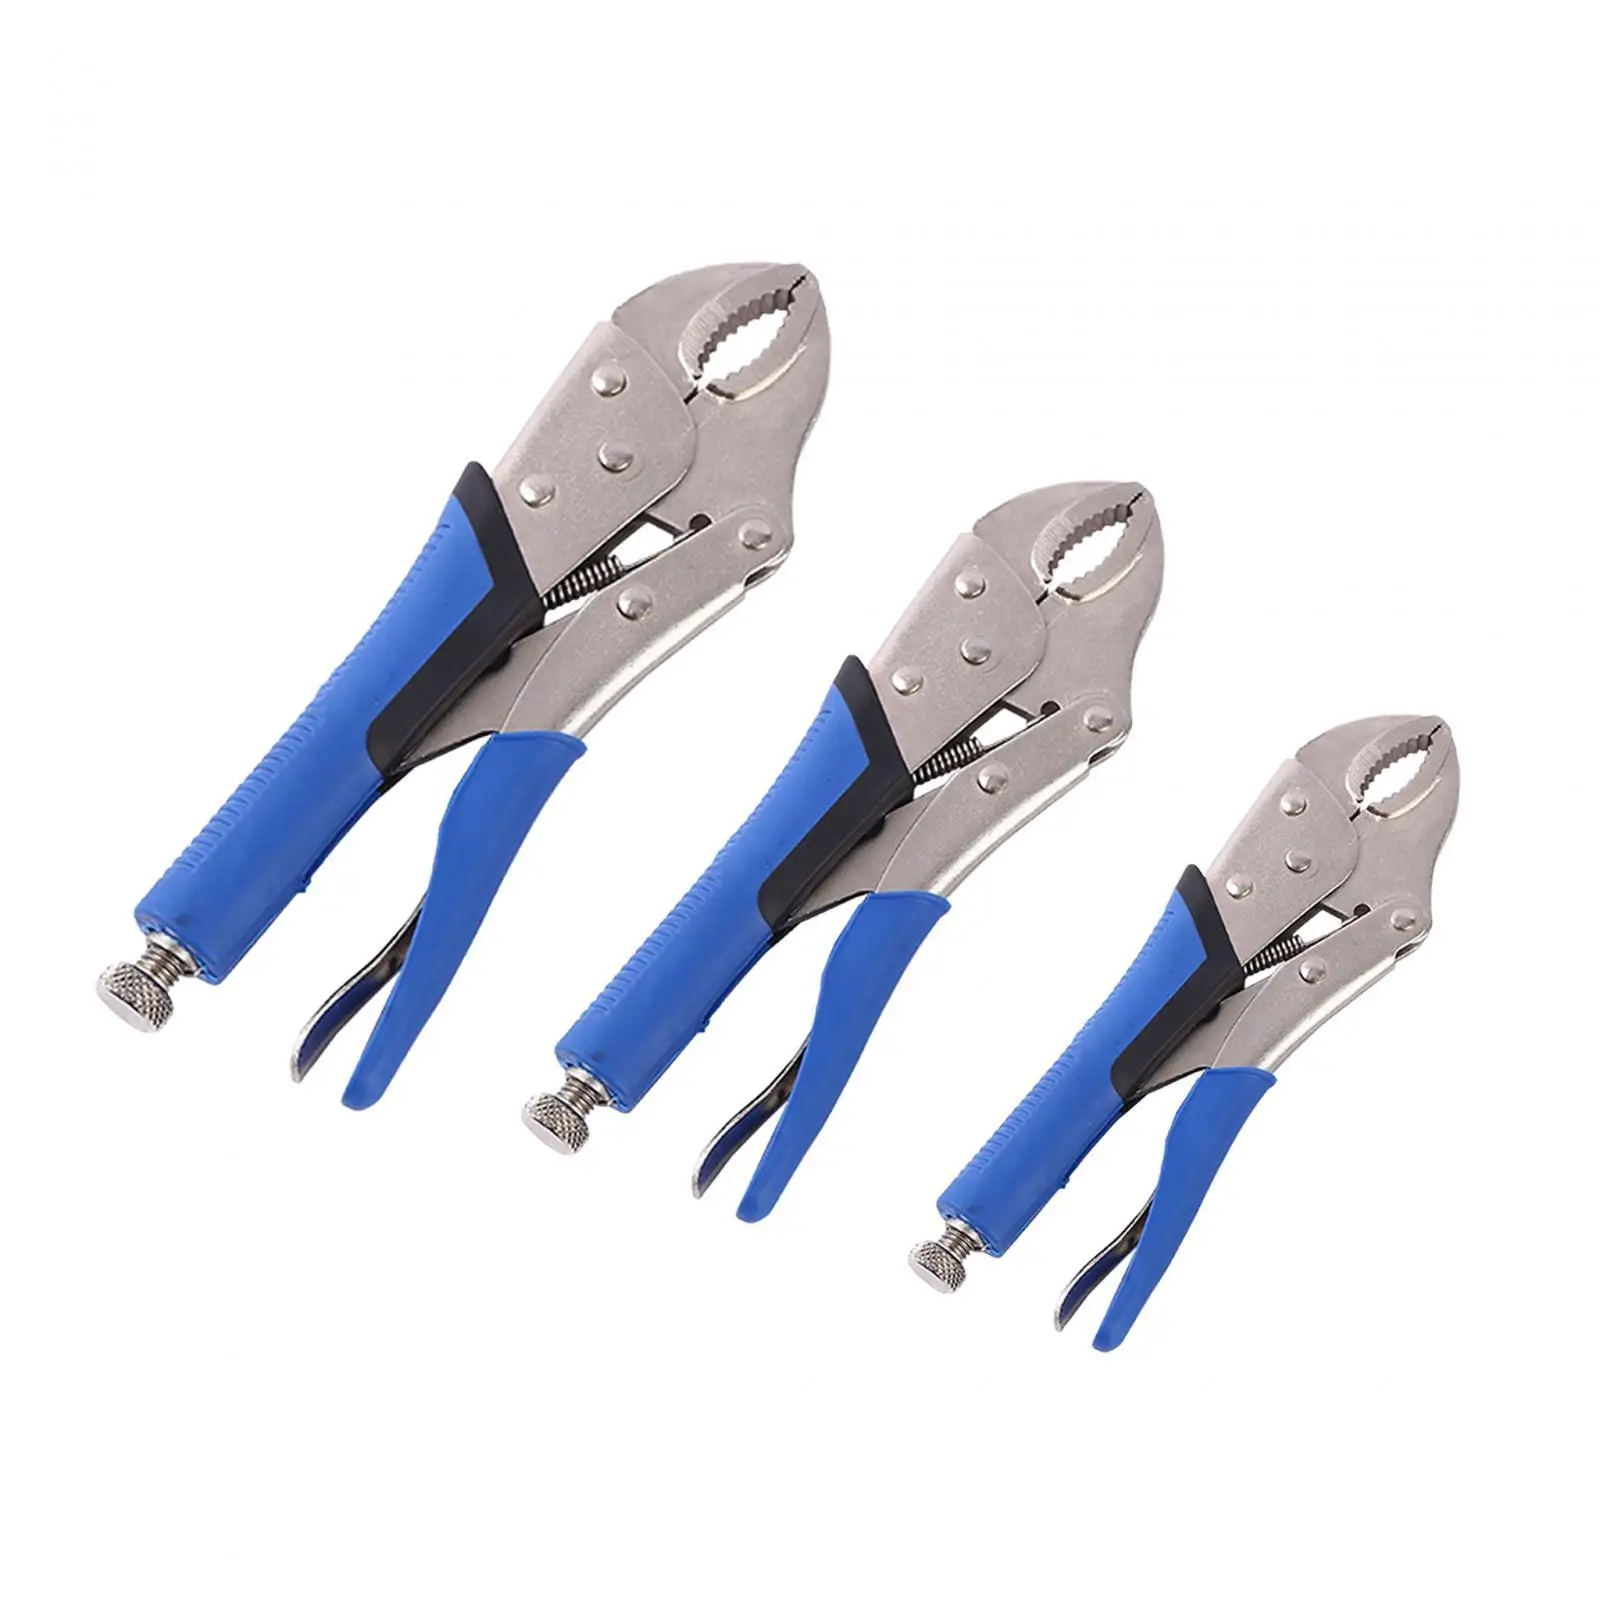 Locking Pliers Industrial Grade Steel Adjustable Welding Tool Ergonomic Handle Grip Pliers for Automotive Automobile Repair